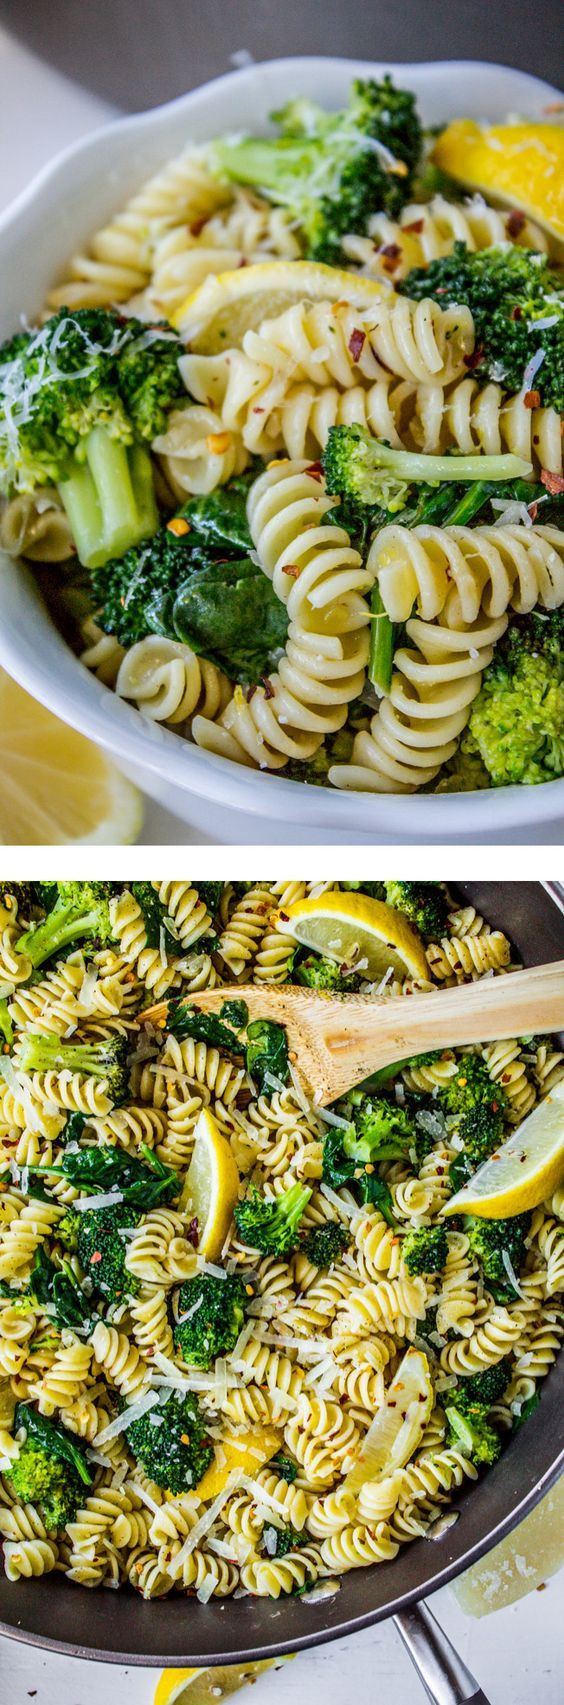 Easy Healthy Dinner
 100 Easy healthy recipes on Pinterest